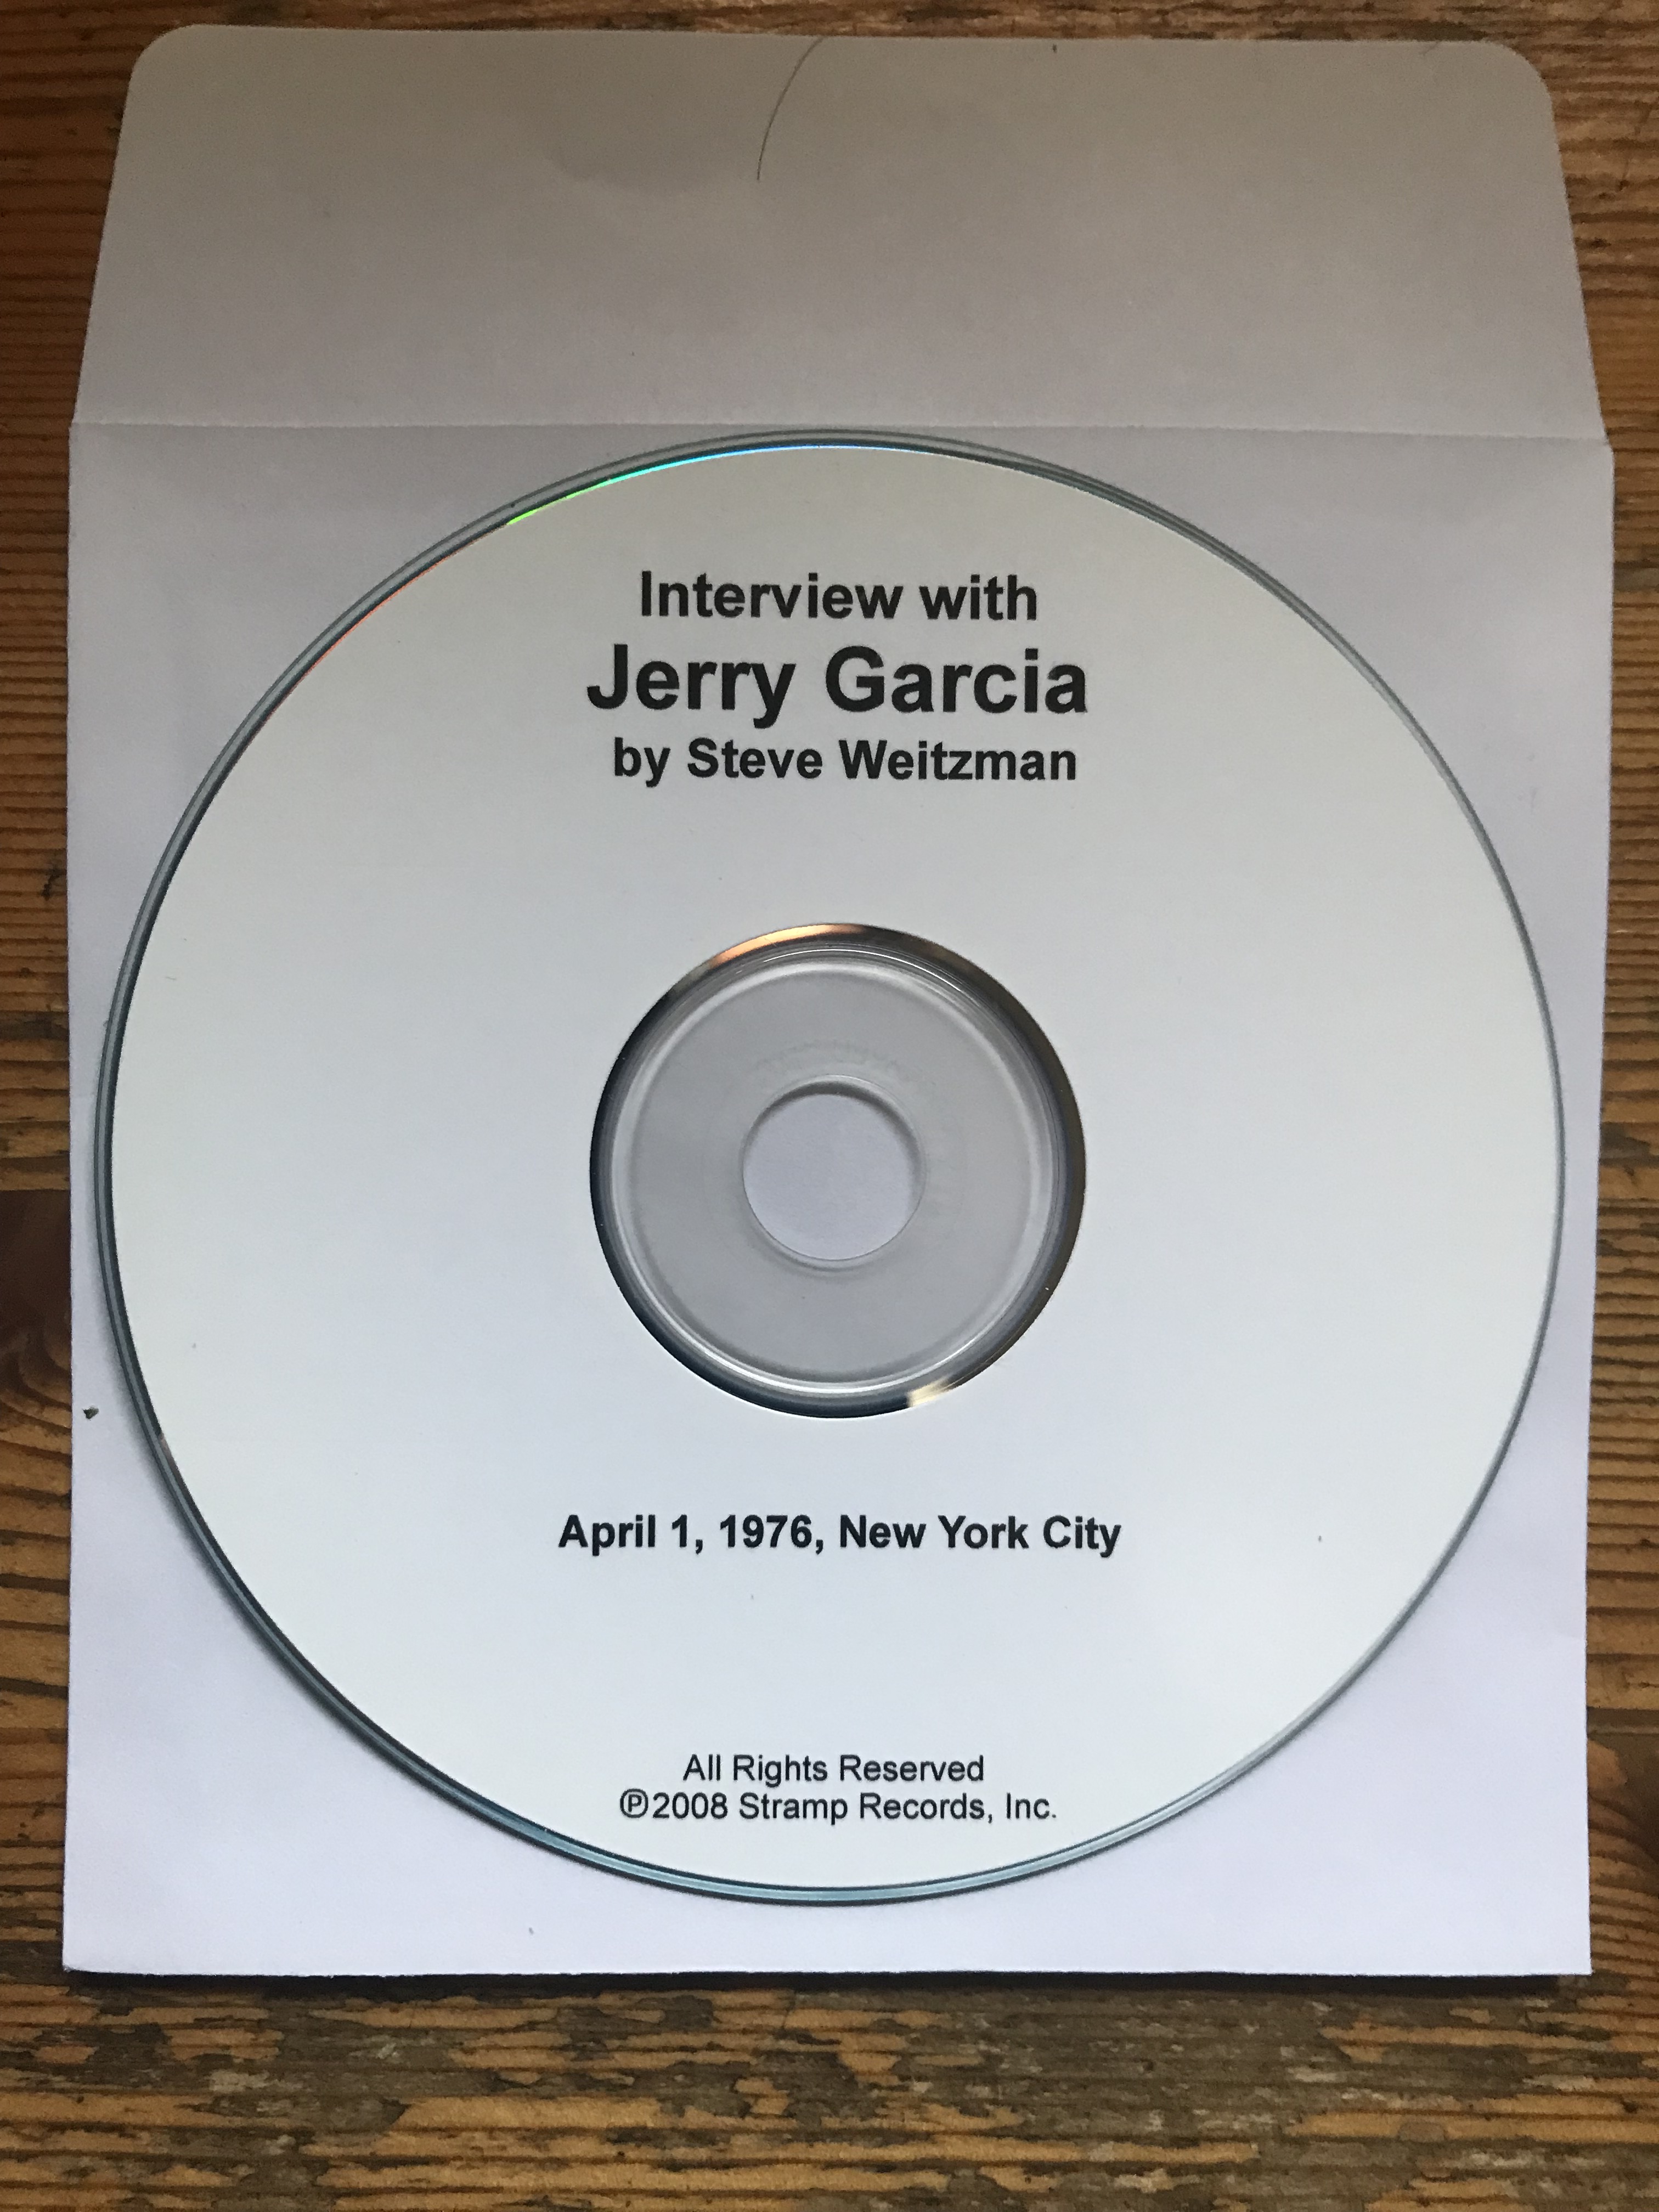 JerryGarcia1976-04-01InterviewWithSteveWeitzmanNYC.jpg